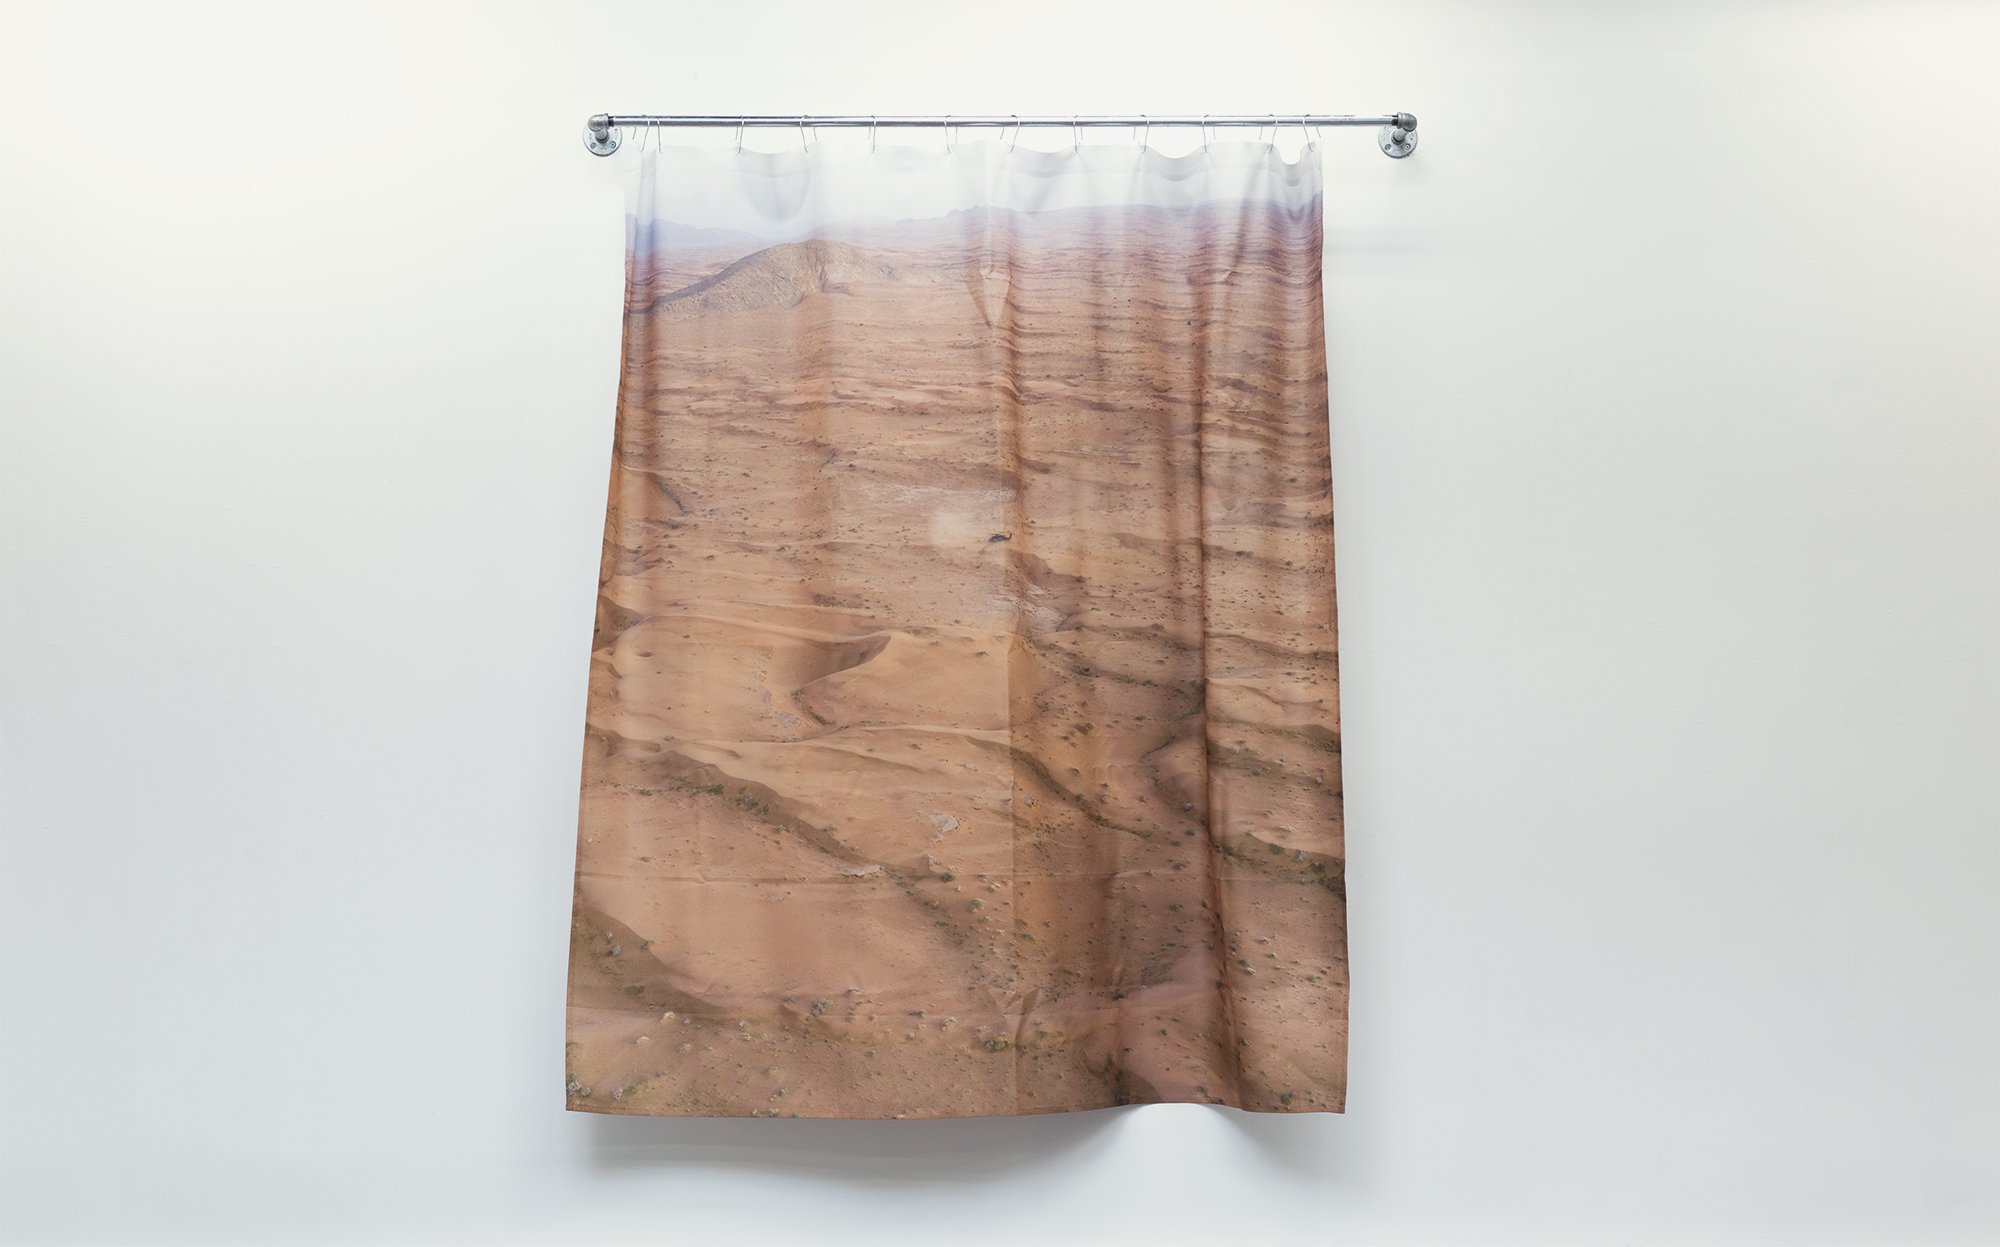   Printed shower curtain, metal hardware, fan  